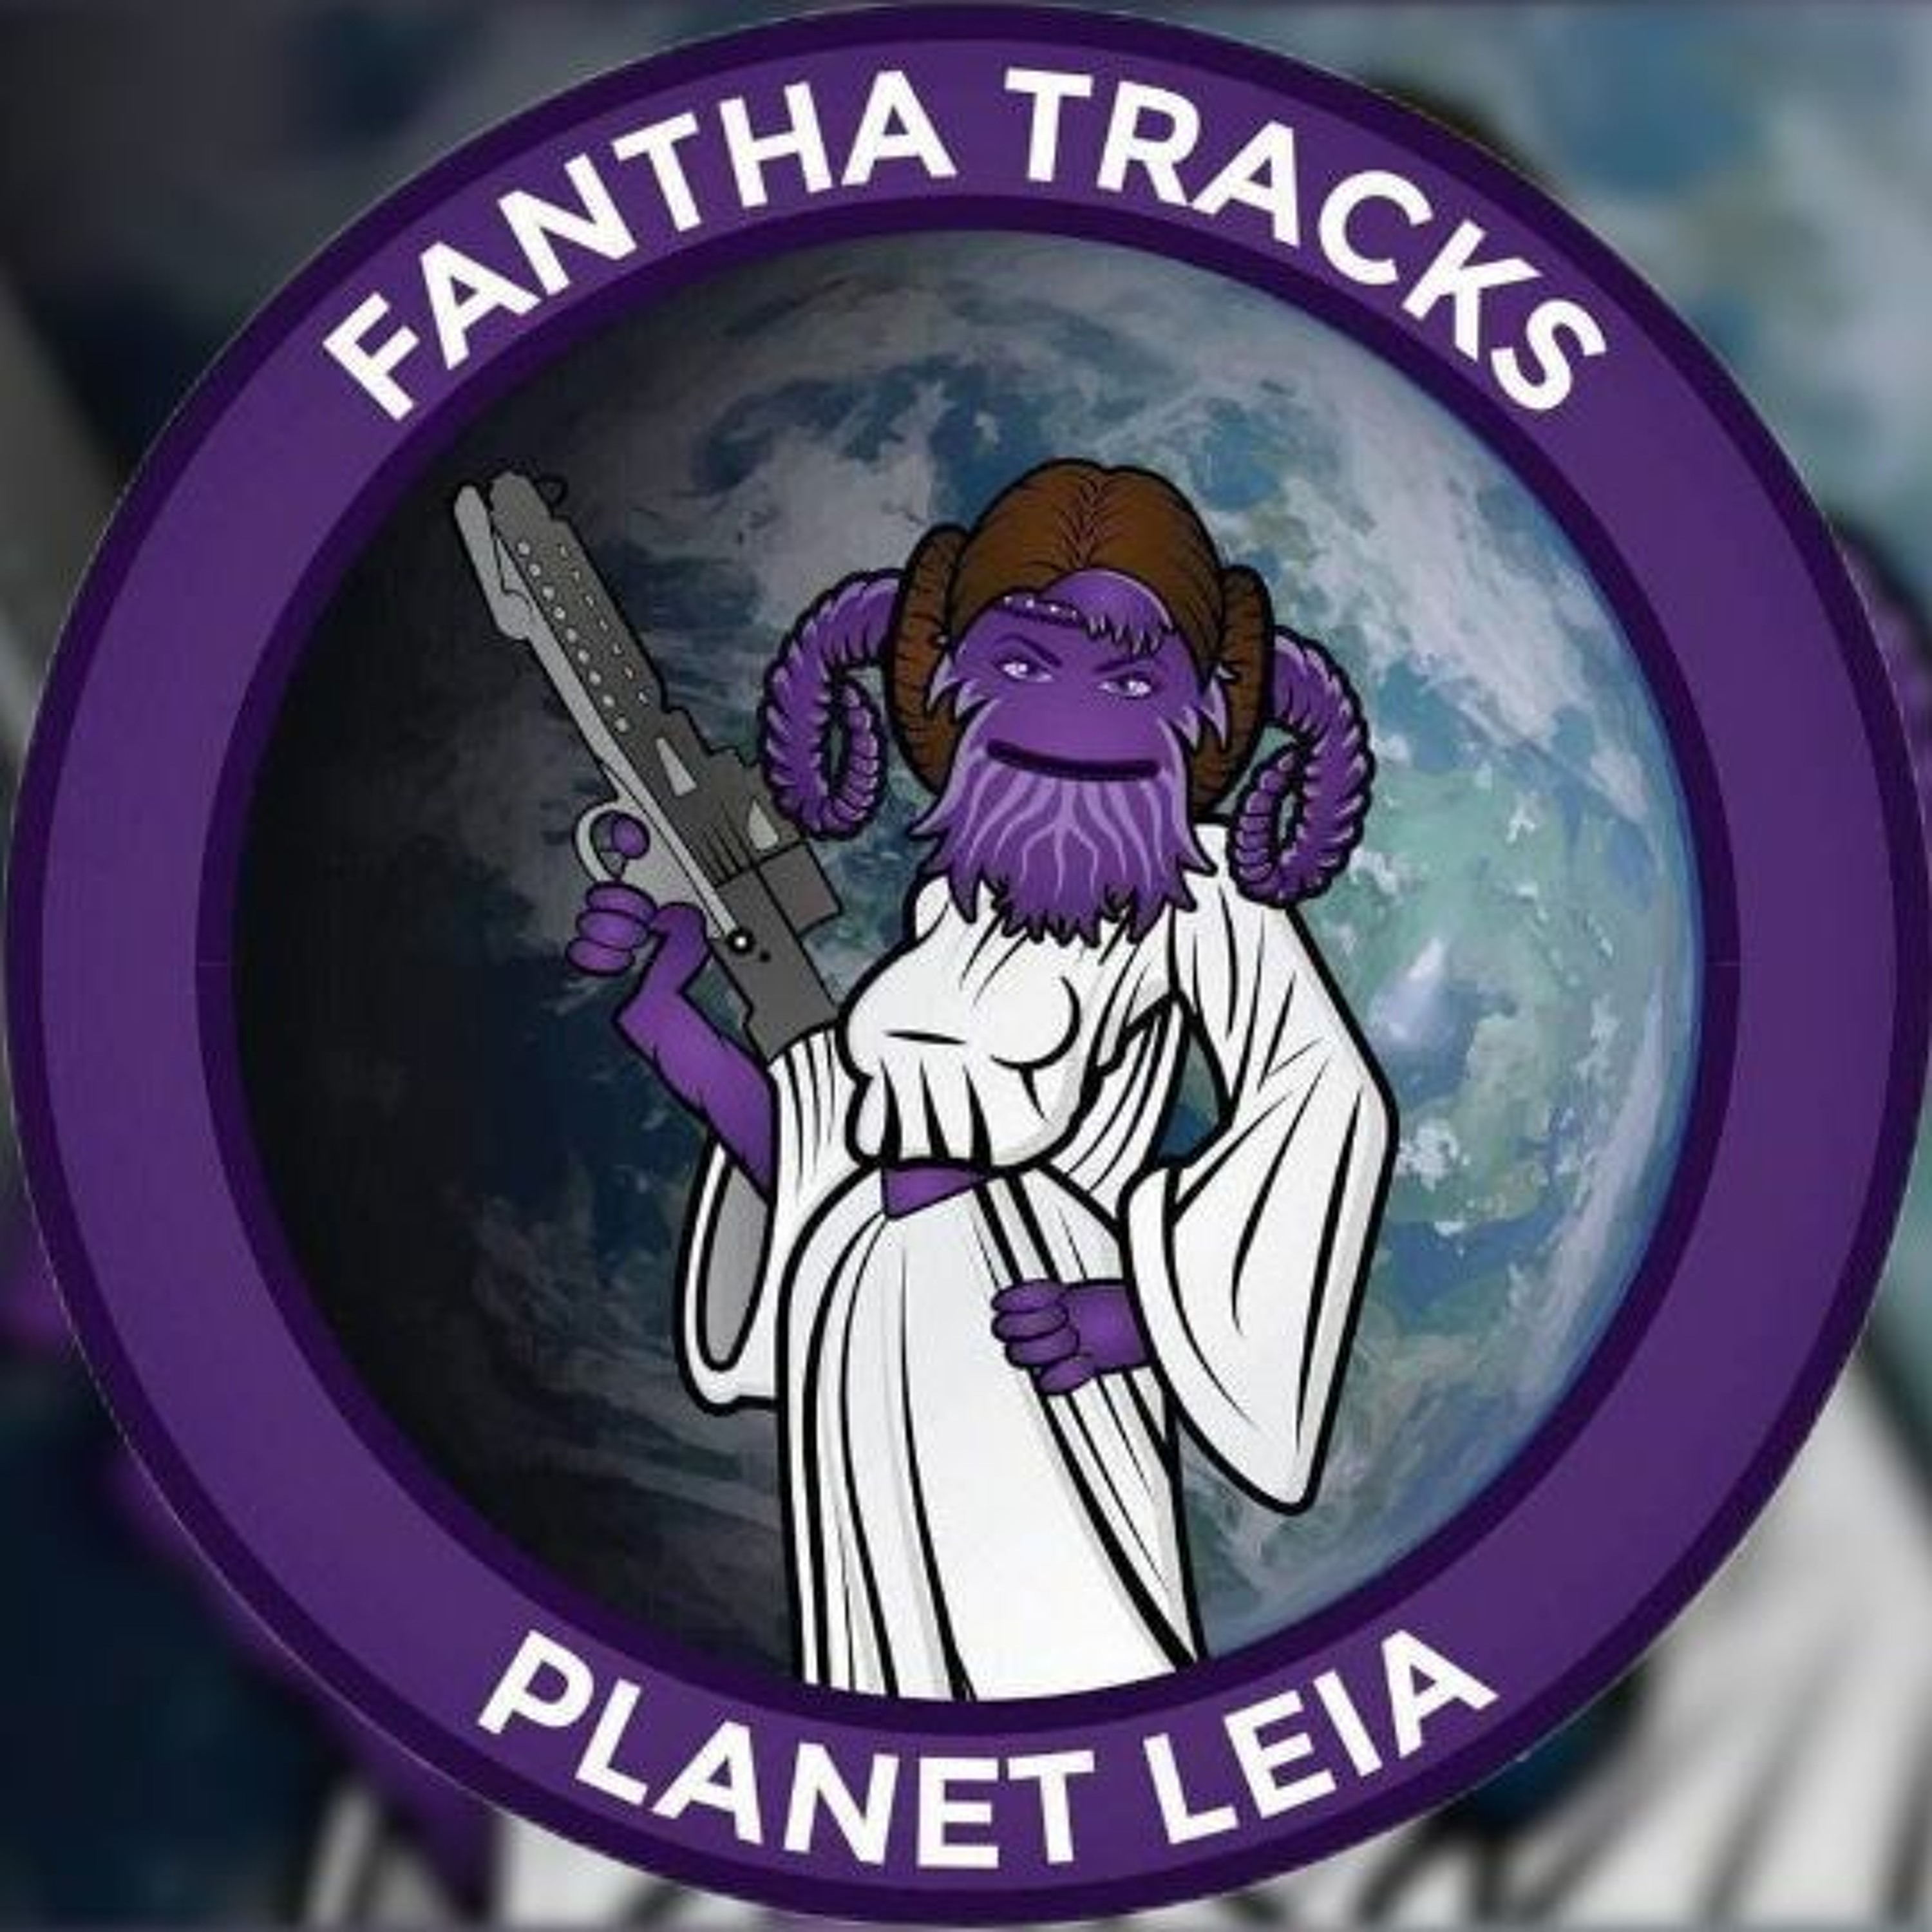 Planet Leia Episode 19: The more you tighten your grip